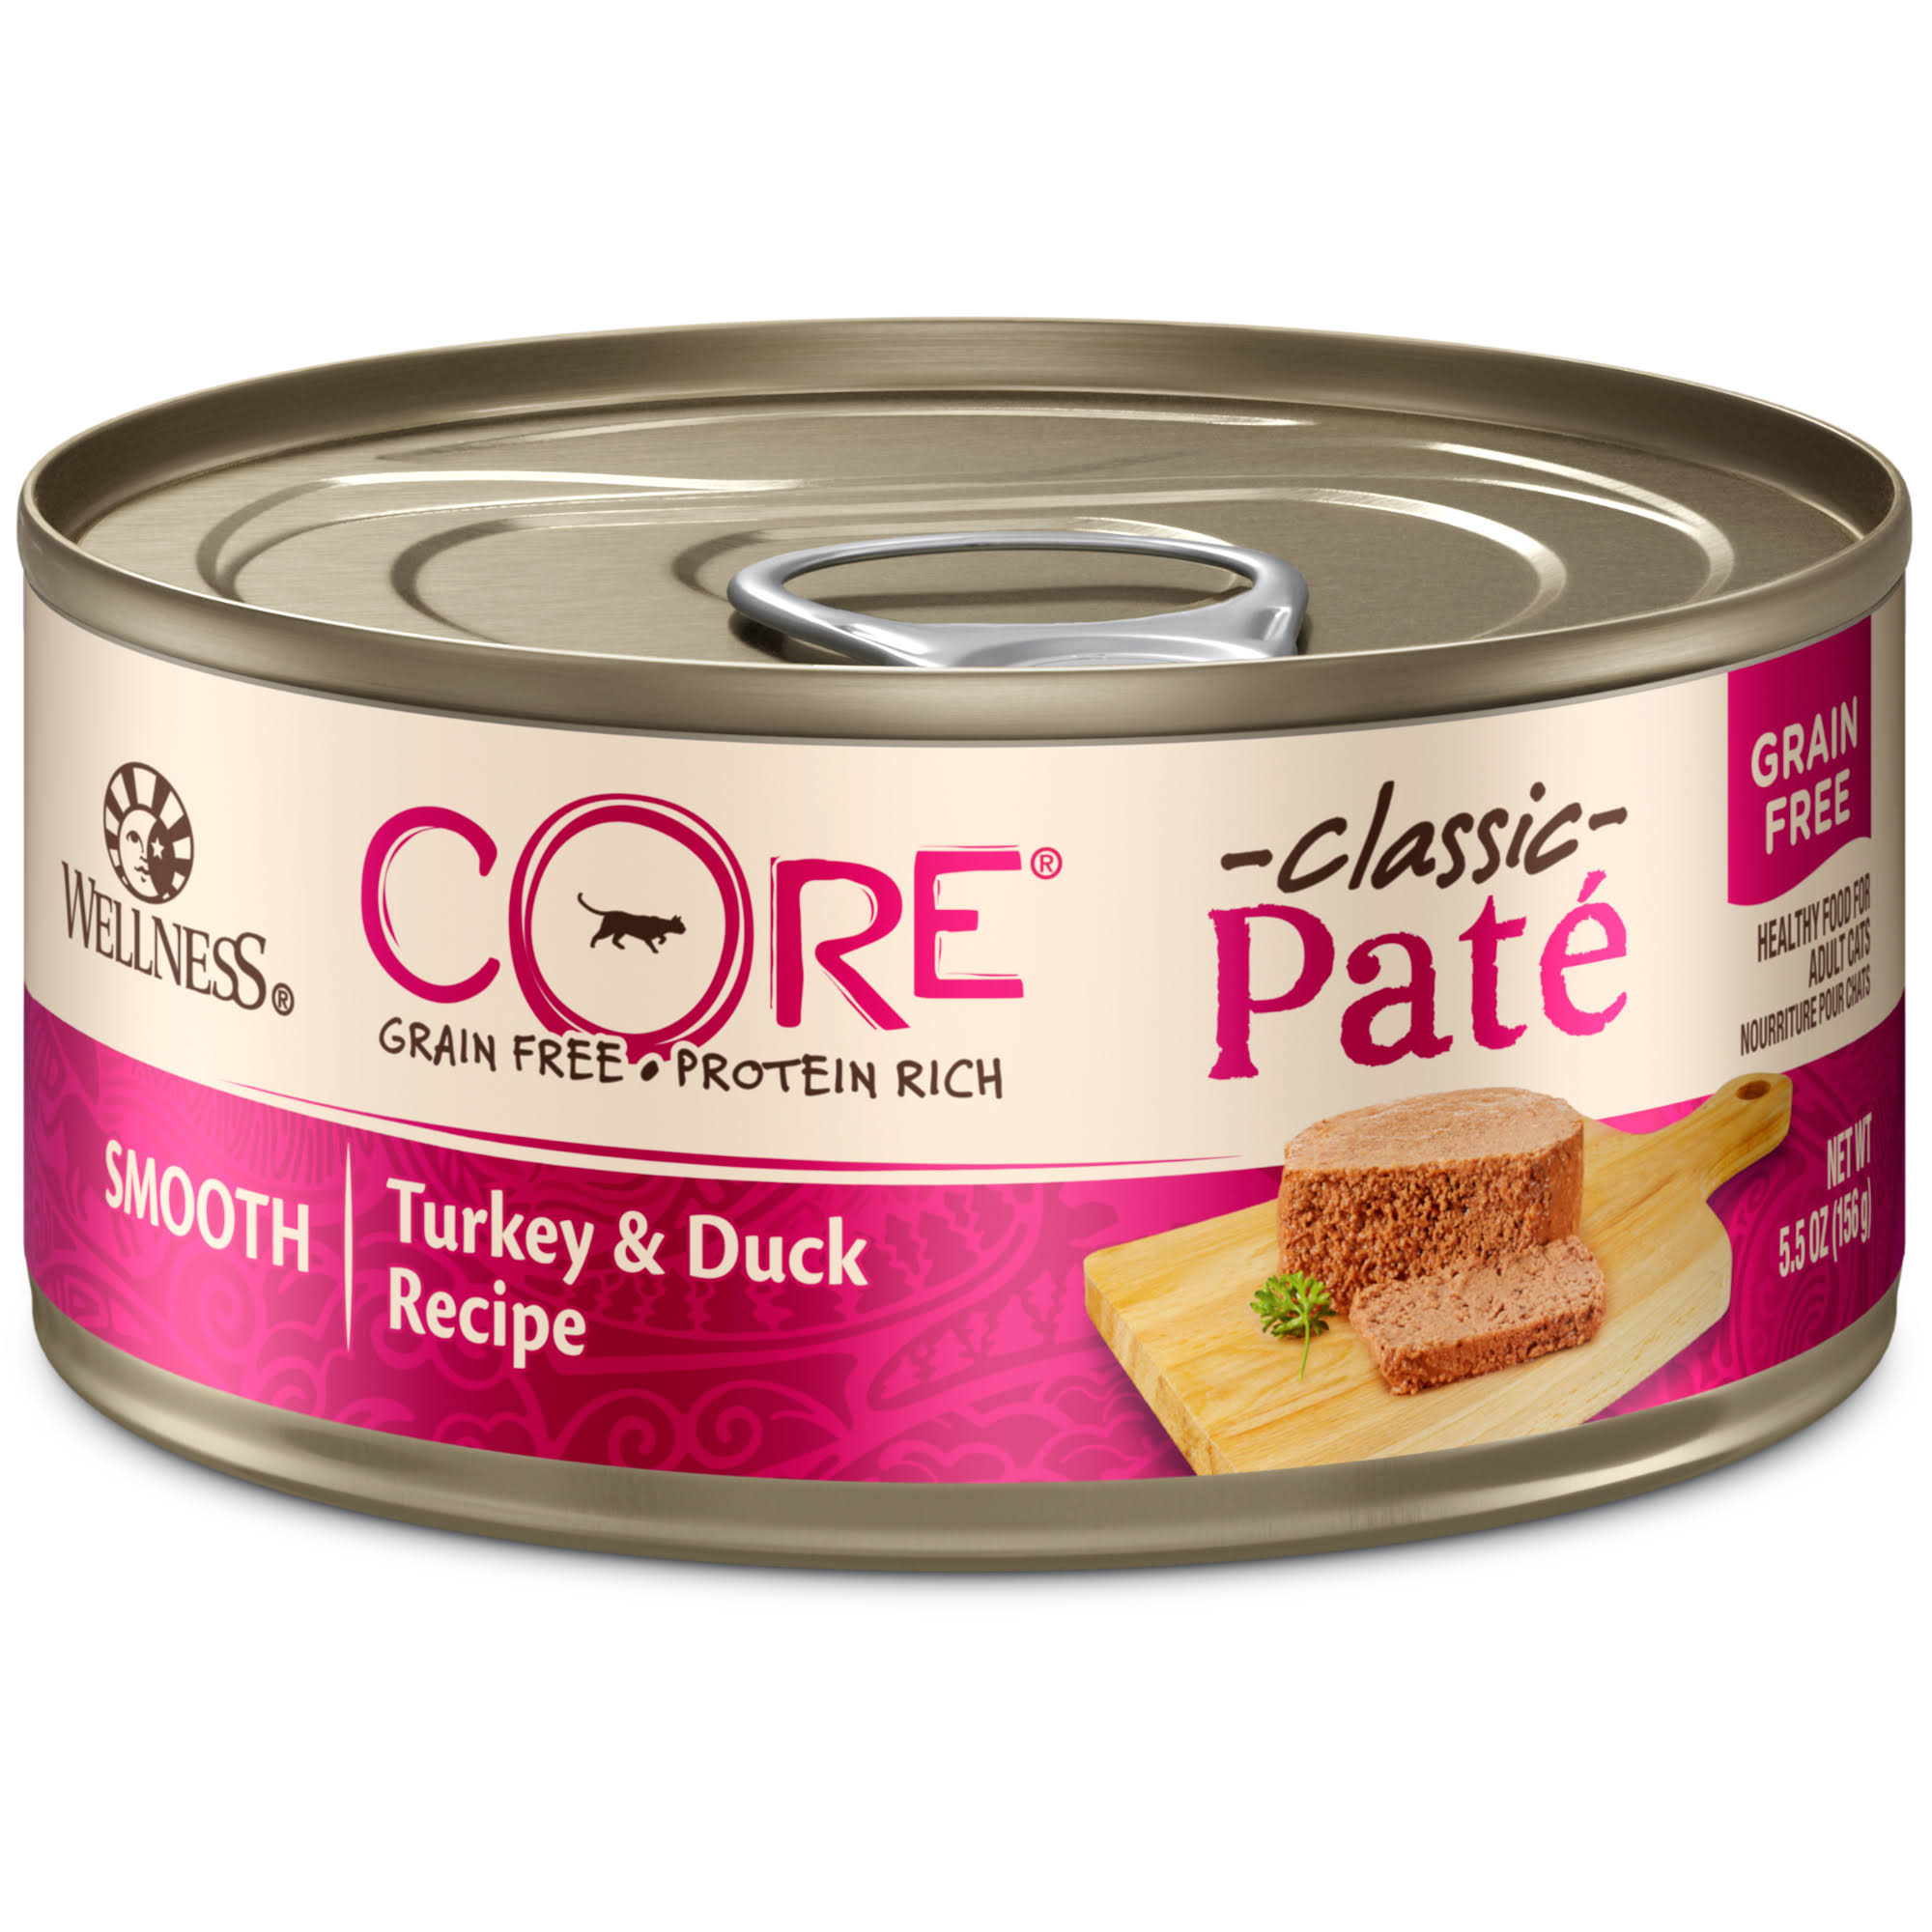 Wellness Core Canned Cat Food - Turkey & Duck